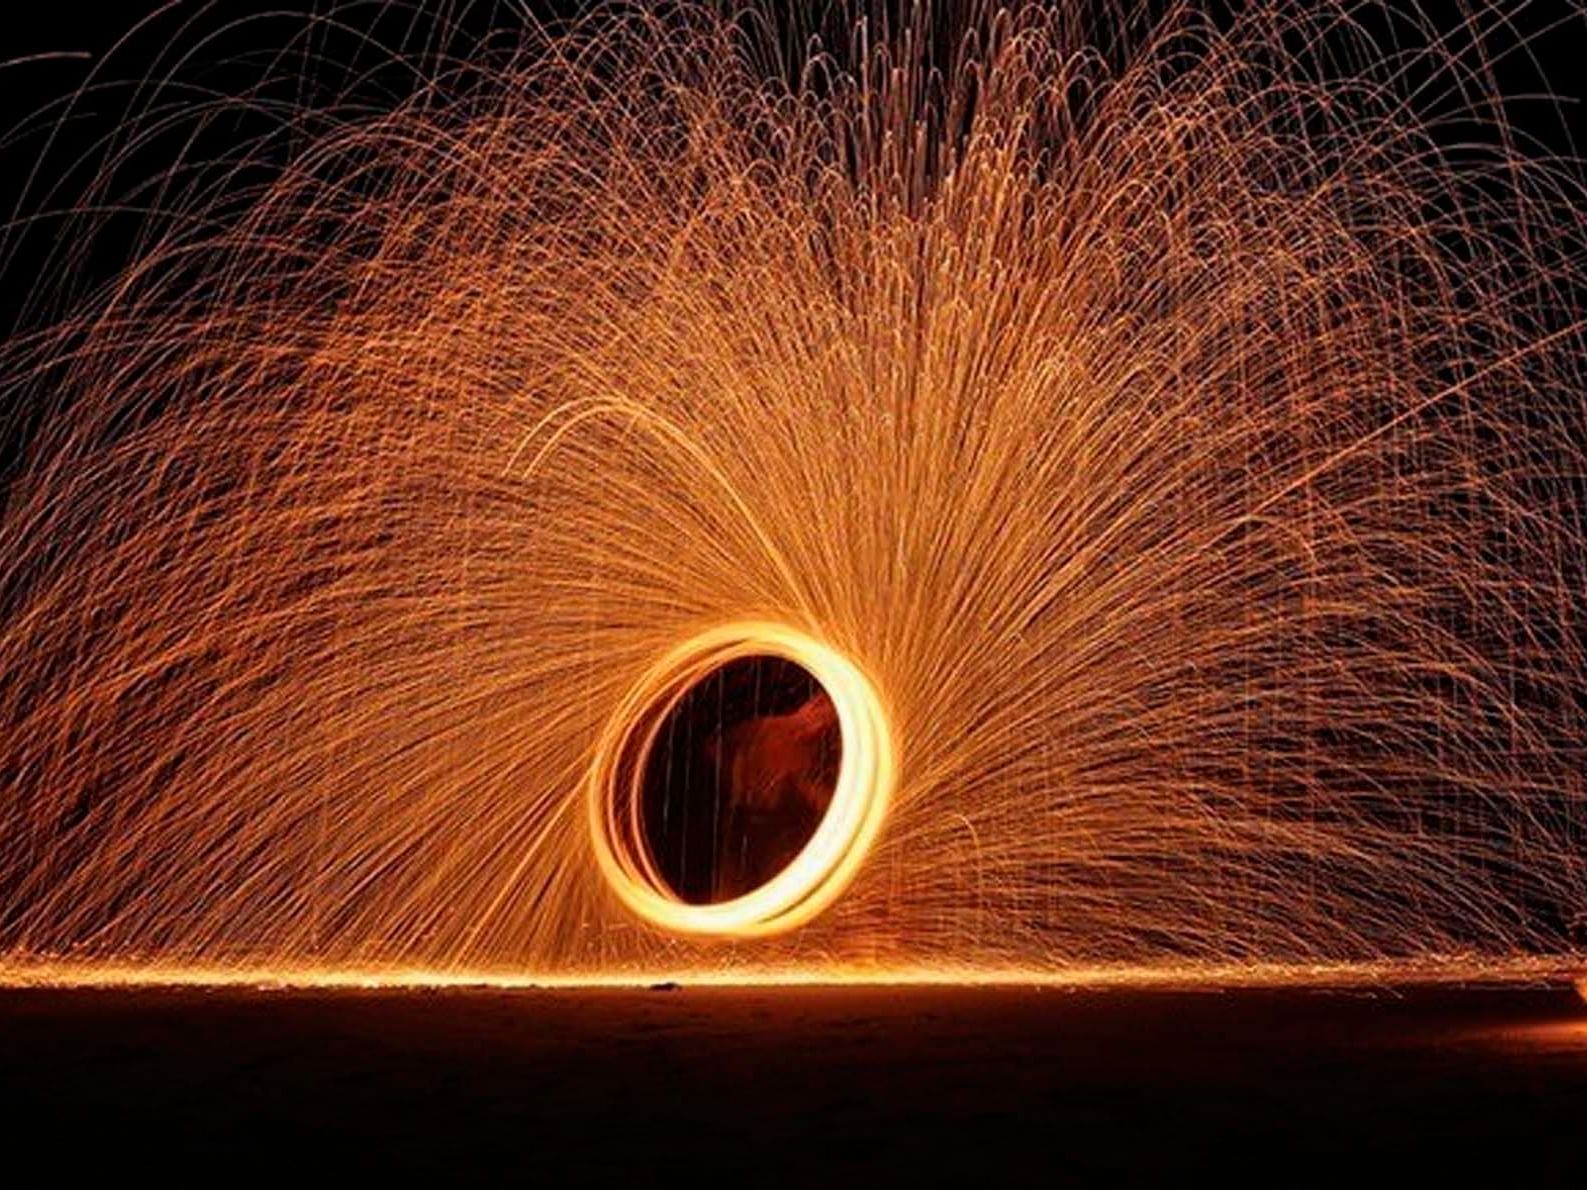 Wire wool spinning on fire near Paradox Phuket Resort